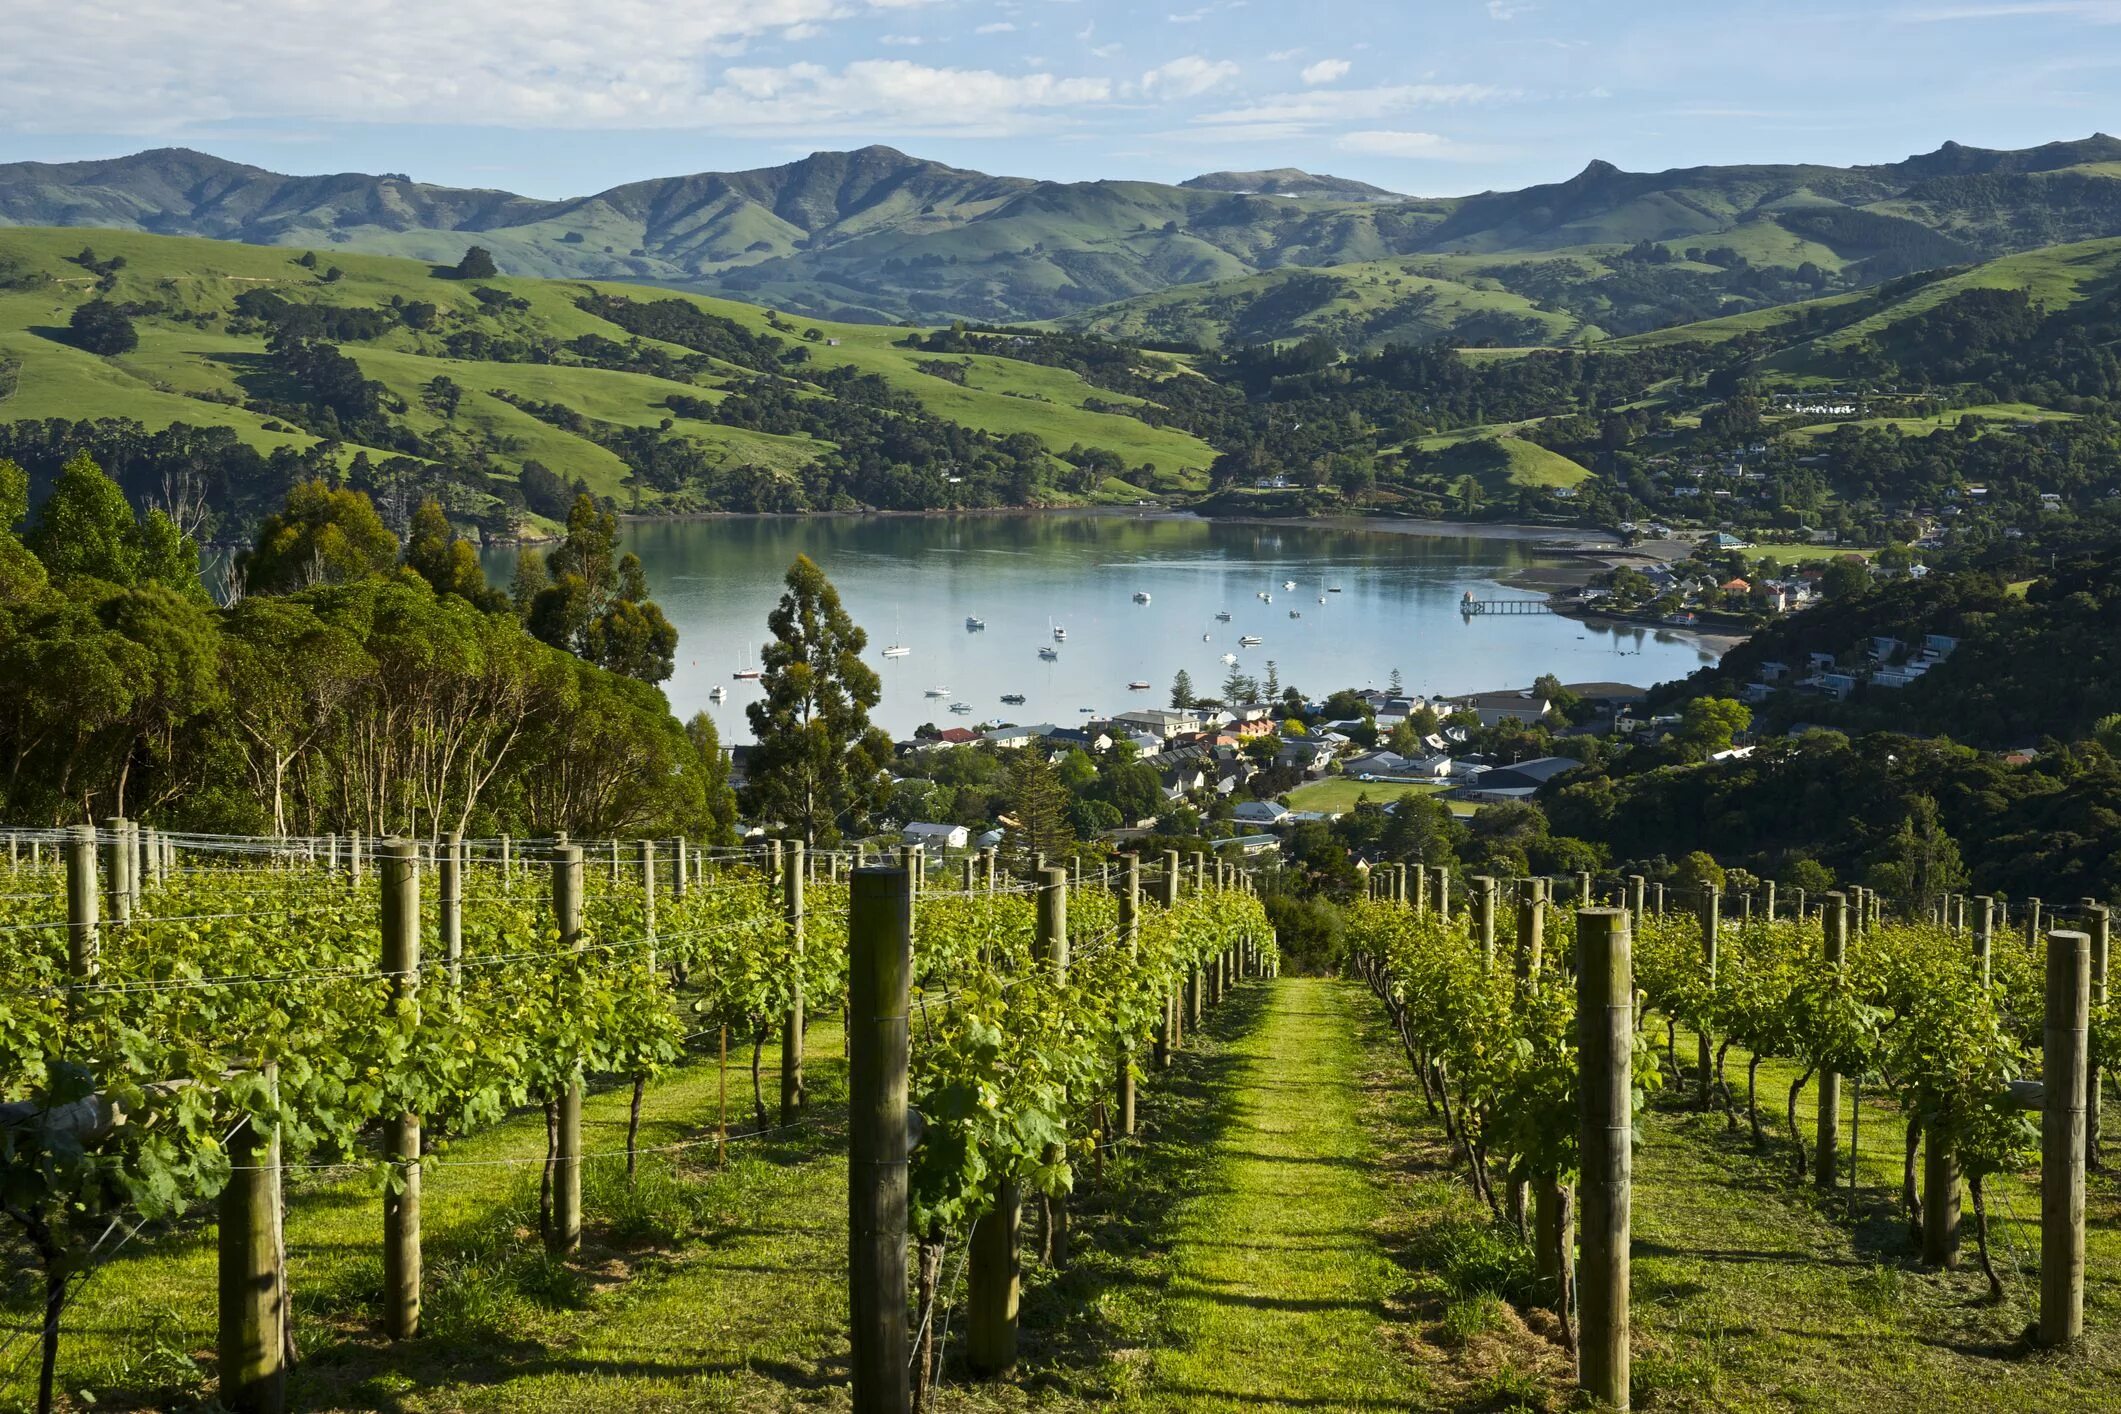 Виноградники Мальборо новая Зеландия. Долина Мальборо новая Зеландия. Марлборо (Marlborough, новая Зеландия) виноградники. Новая Зеландия регион Мальборо вино.